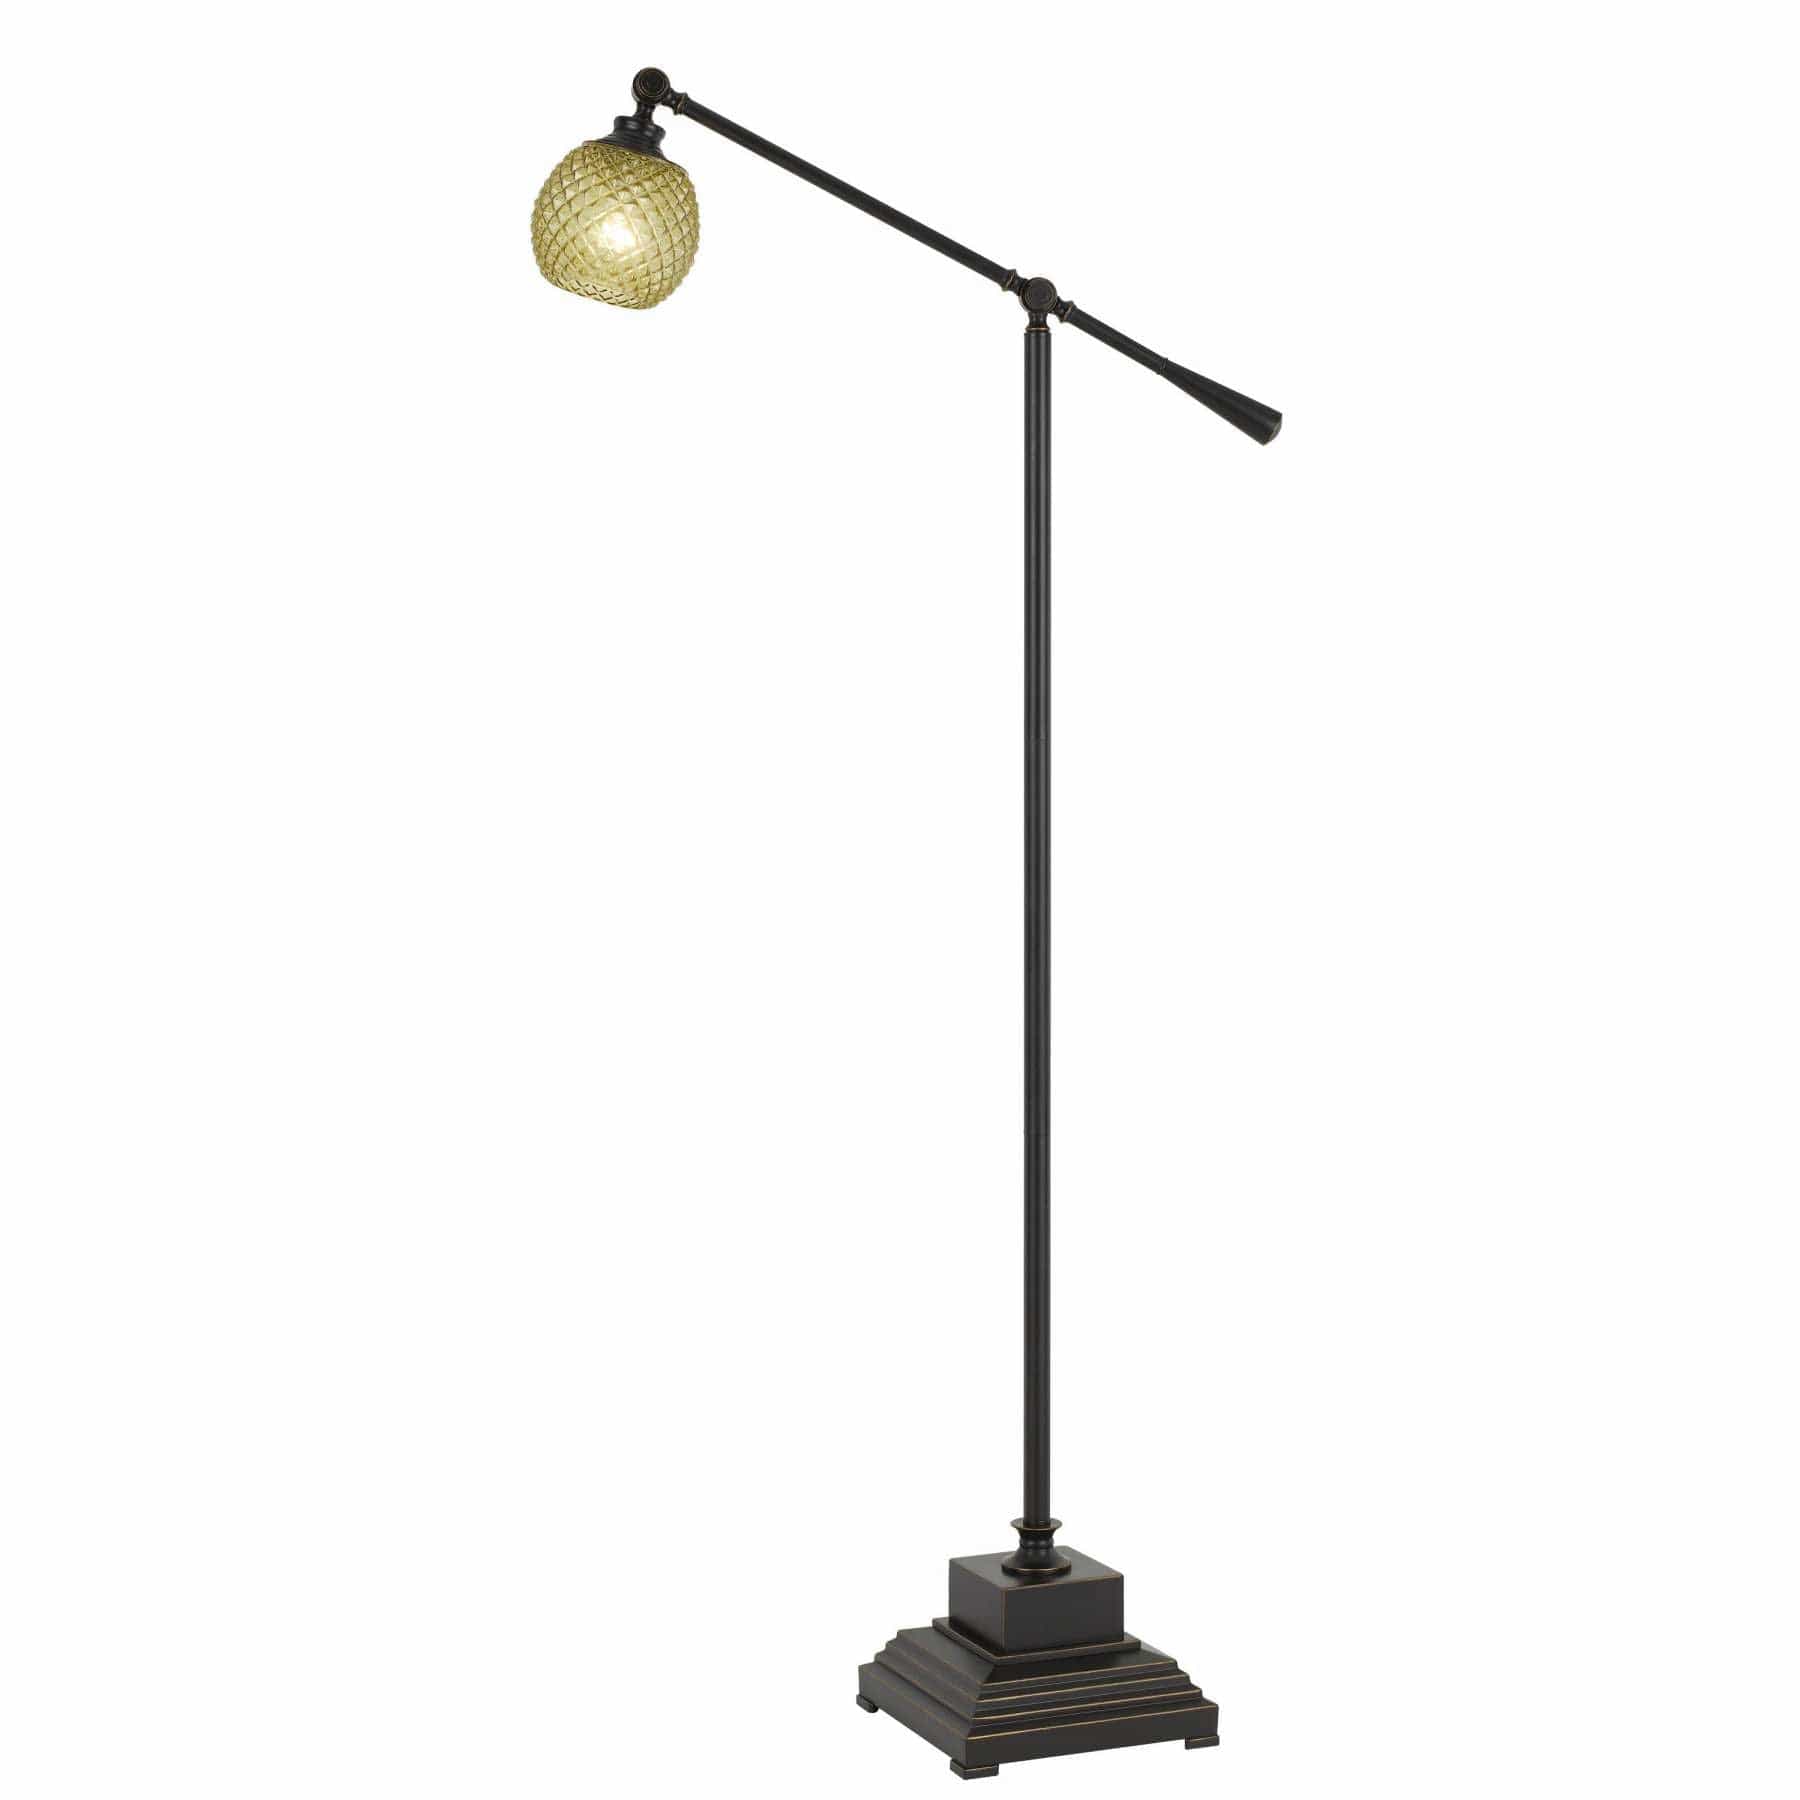 Benzara Metal Body Floor Lamp With Adjustable Arm And Textured Glass Shade, Black By Benzara Floor Lamps BM224890